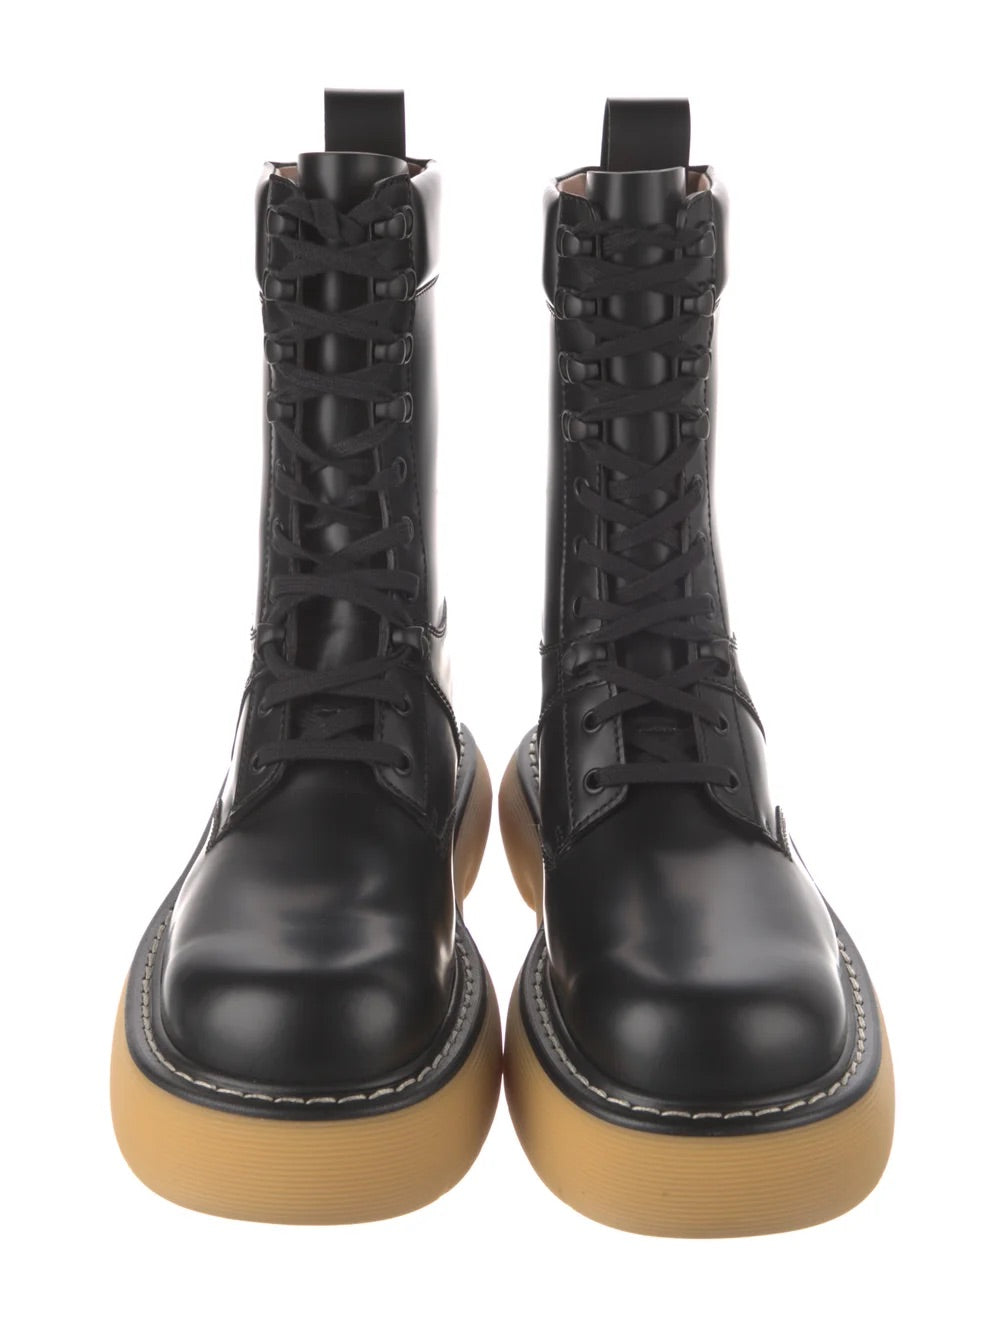 New Bottega Veneta Leather Combat Boots w/ Tags